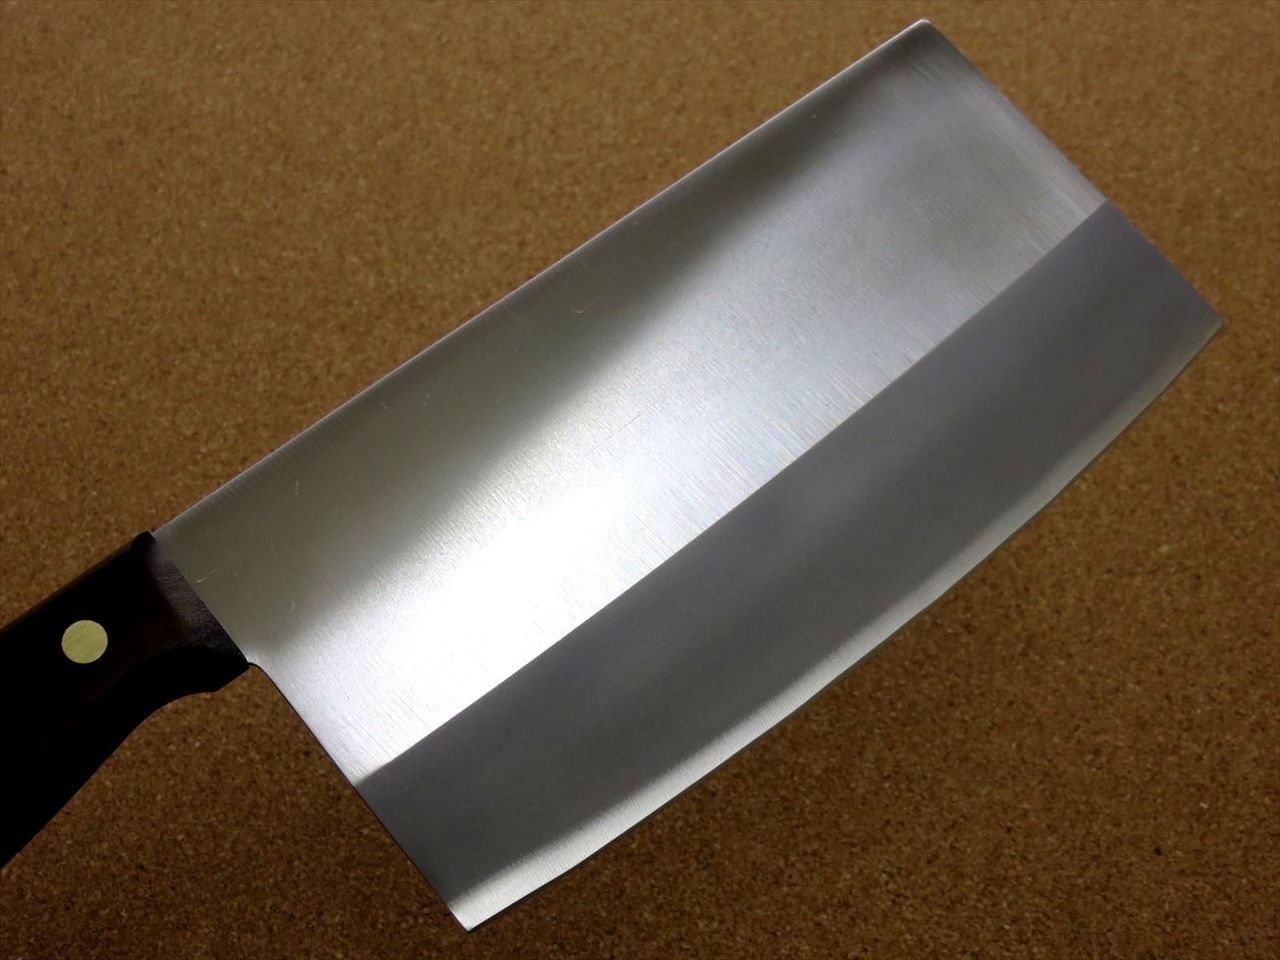 Japanese Masahiro Kitchen Chinese Chef Knife 6.9 inch 3 Layers TX-101 SEKI JAPAN